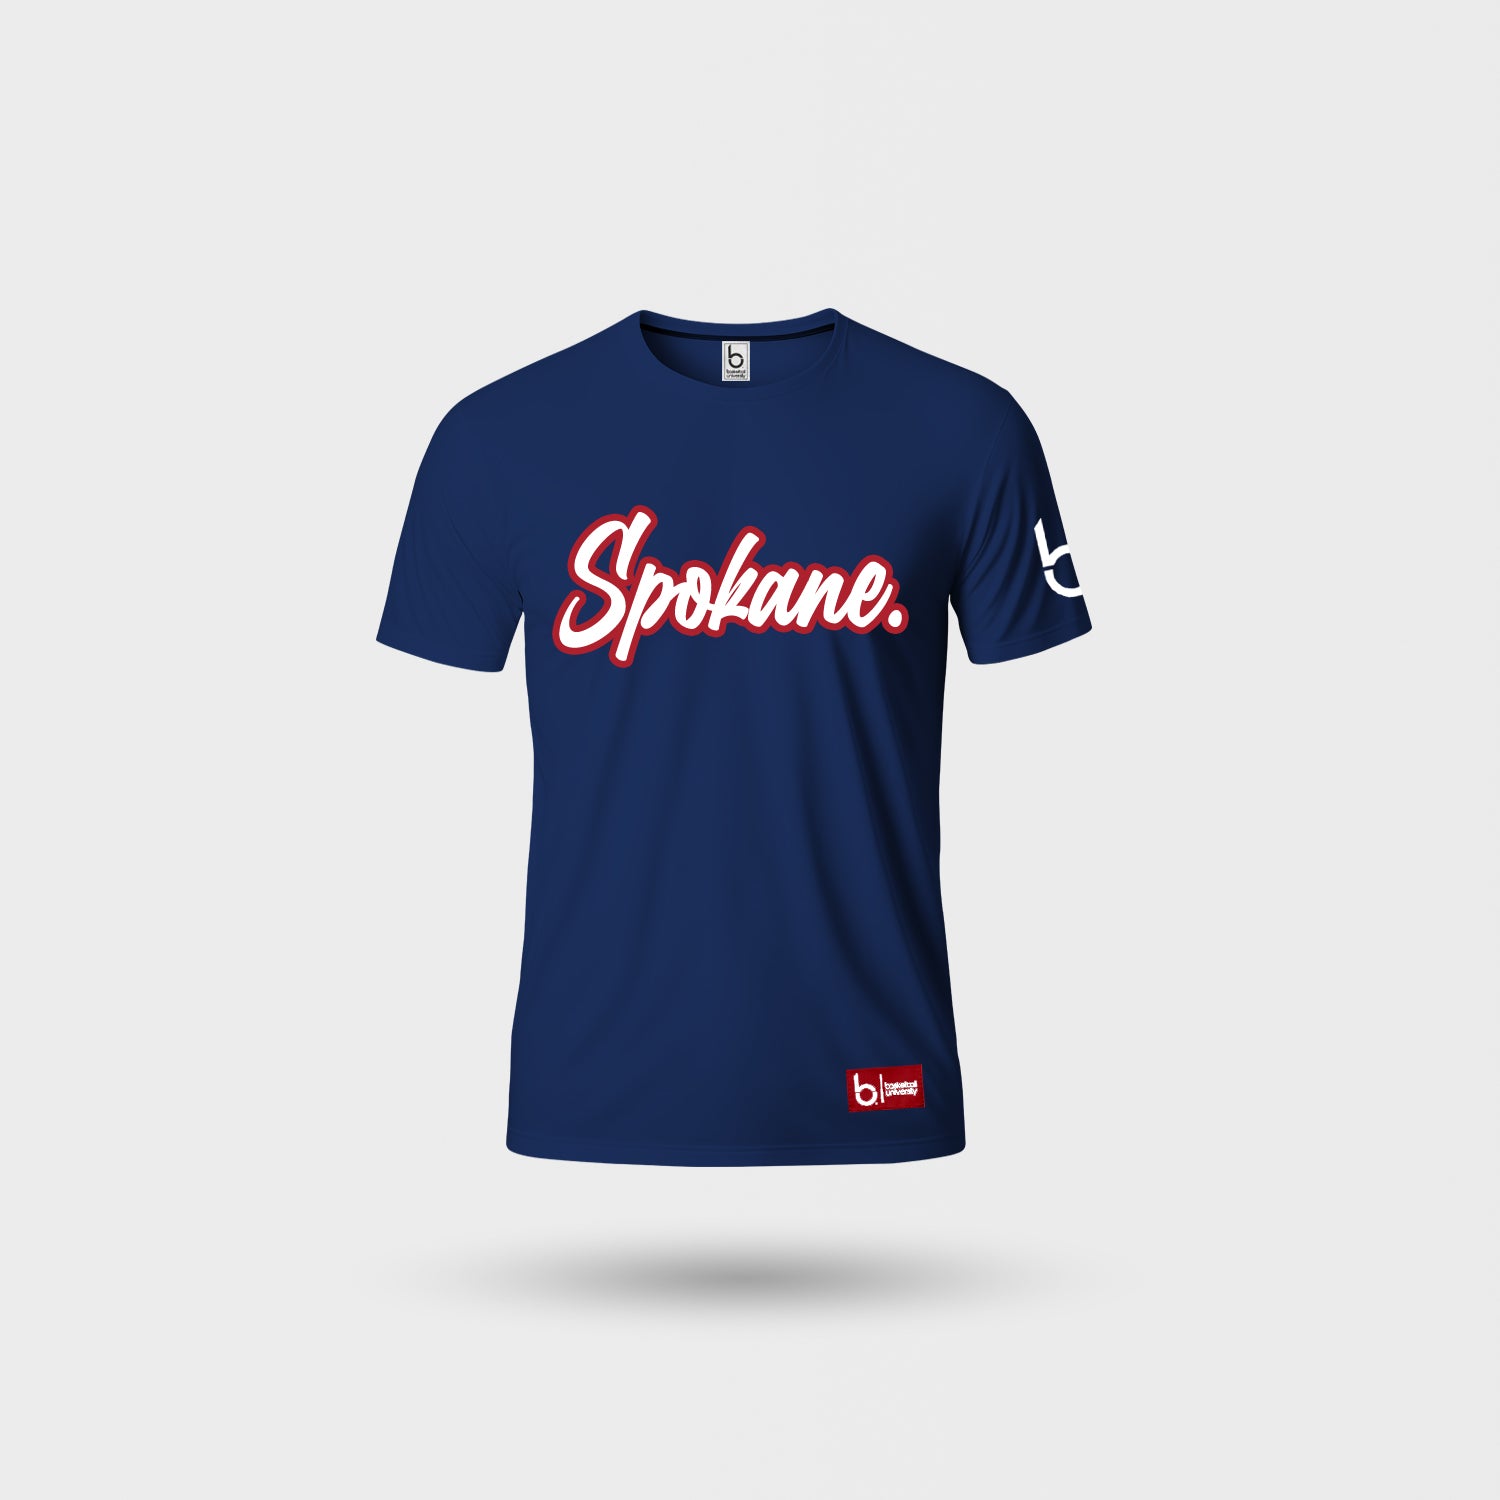 Spokane - Hoop City T-Shirt